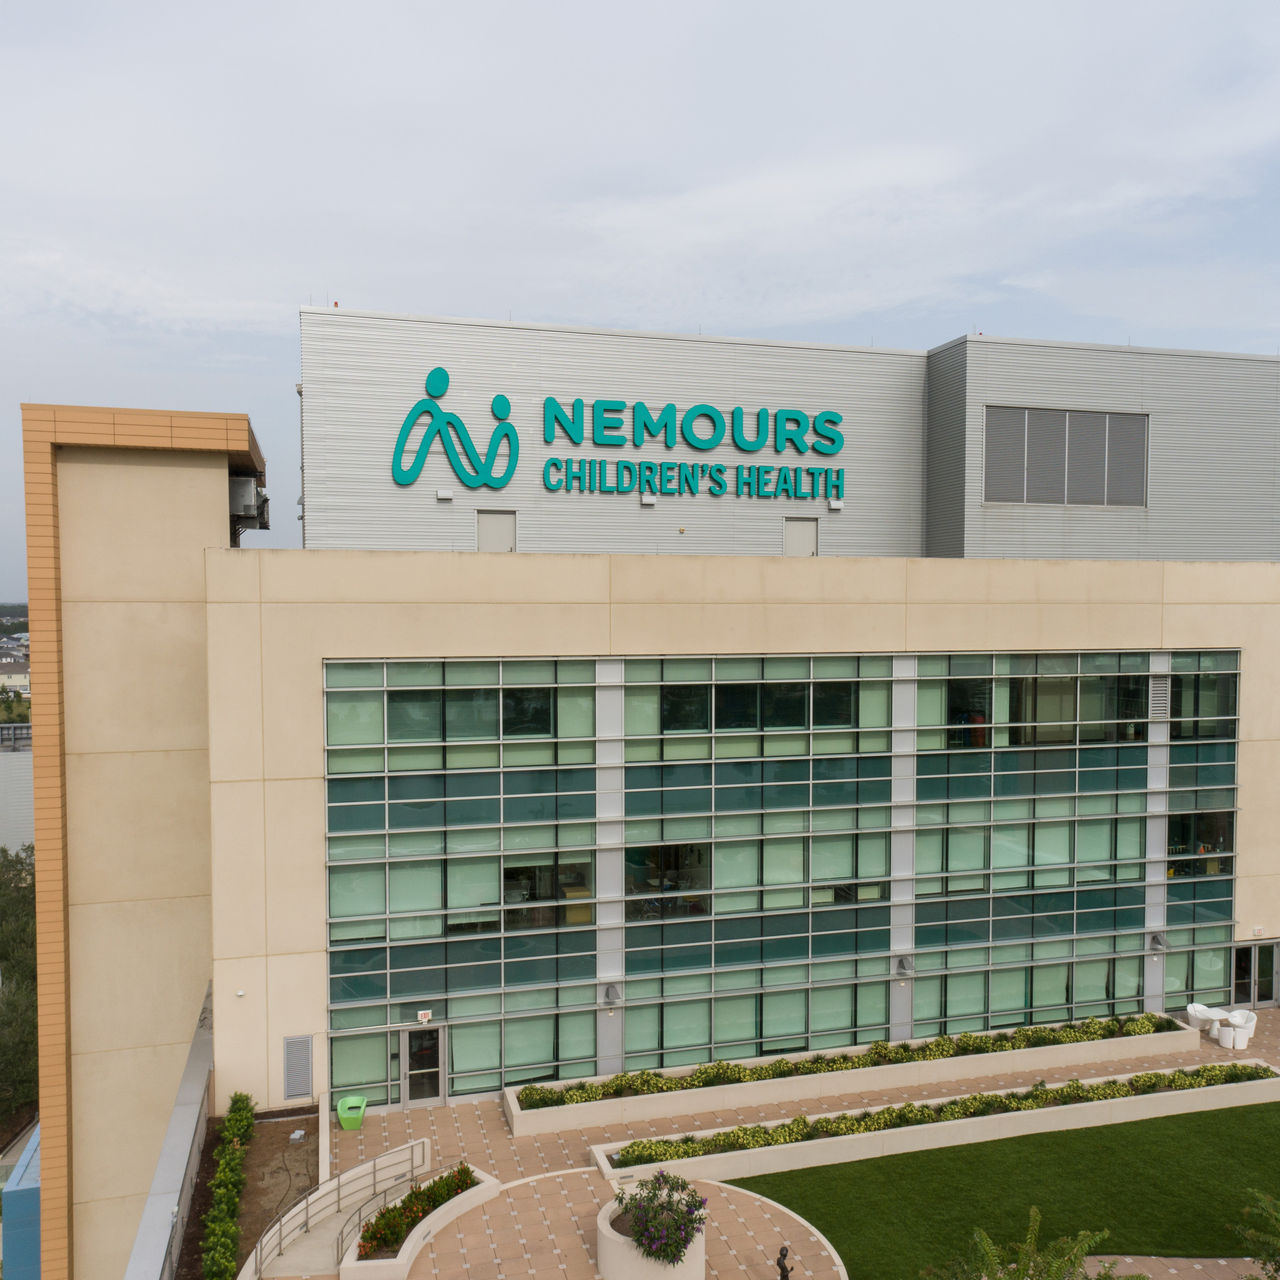 Exterior of Nemours Children's Health, Florda